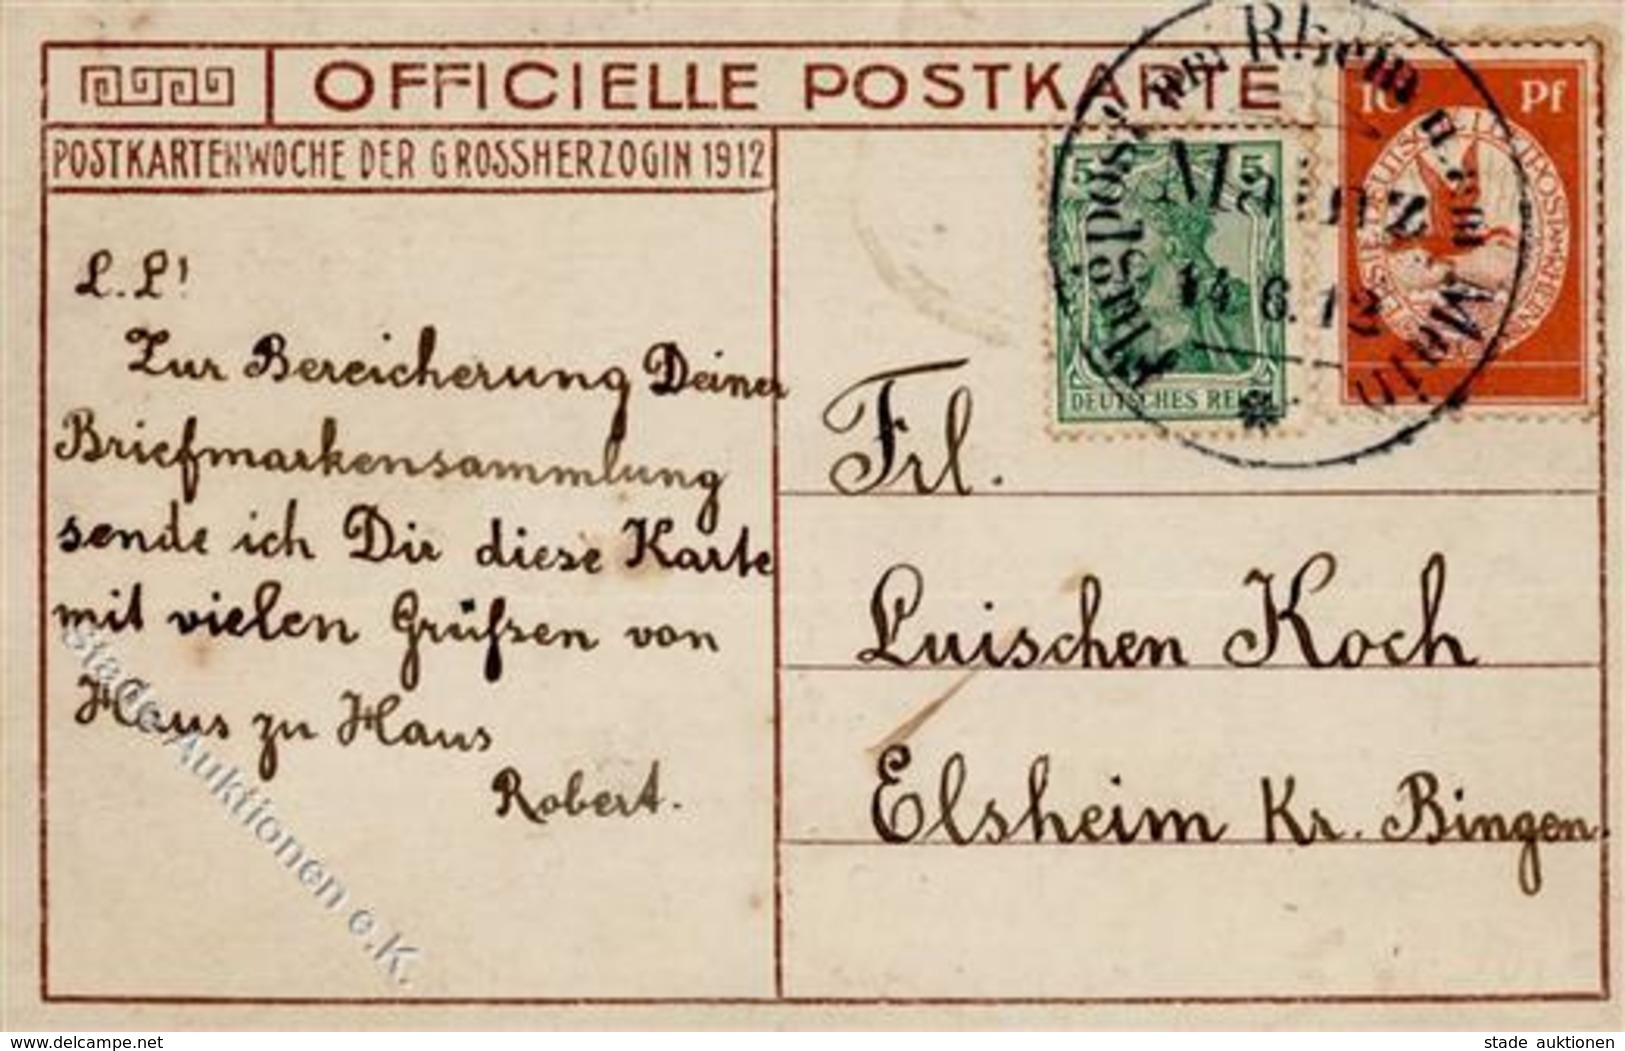 Flugpost DR 1912, Mi.Nr.I U.a., 10 Pf Flugpost Am Rhein, Mit 5 Pf Germania, Altersspuren, Auf Offiz. Postkarte (Großherz - Balloons